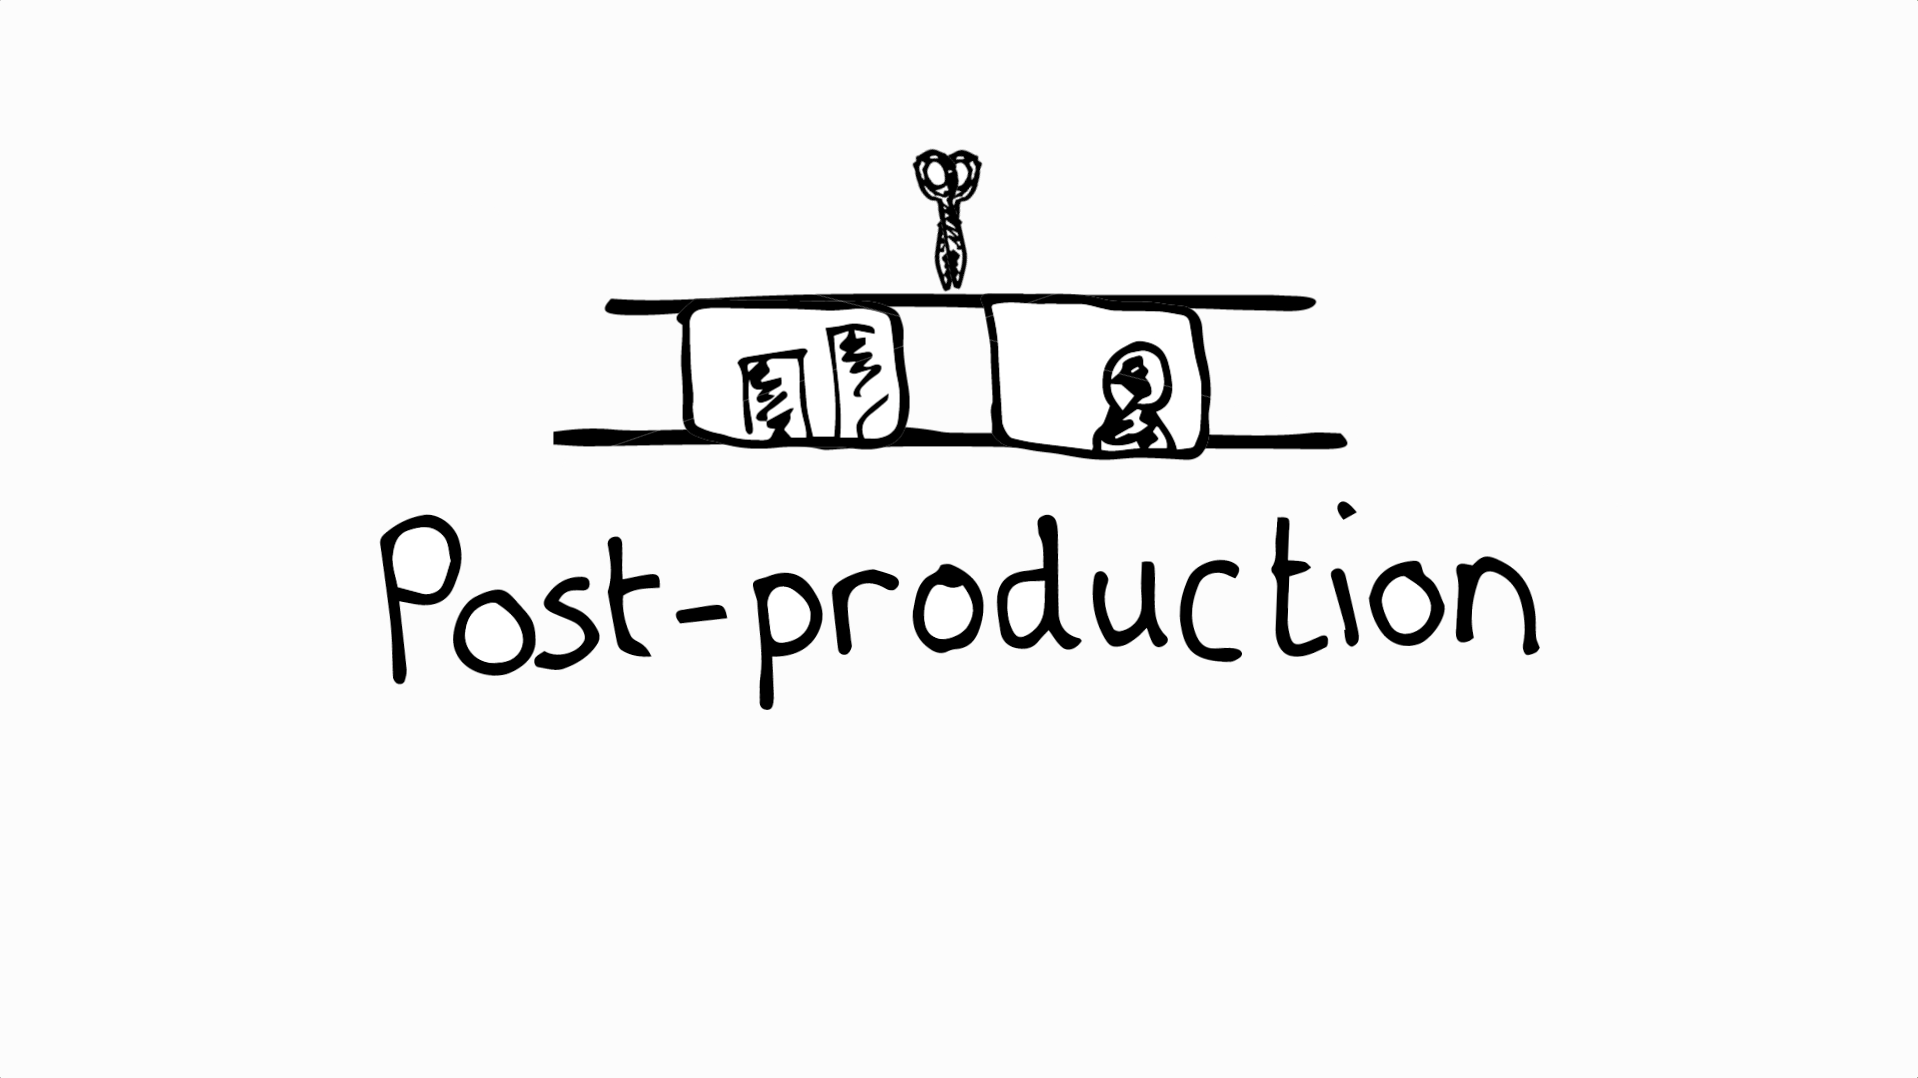 Post Production hand drawn image